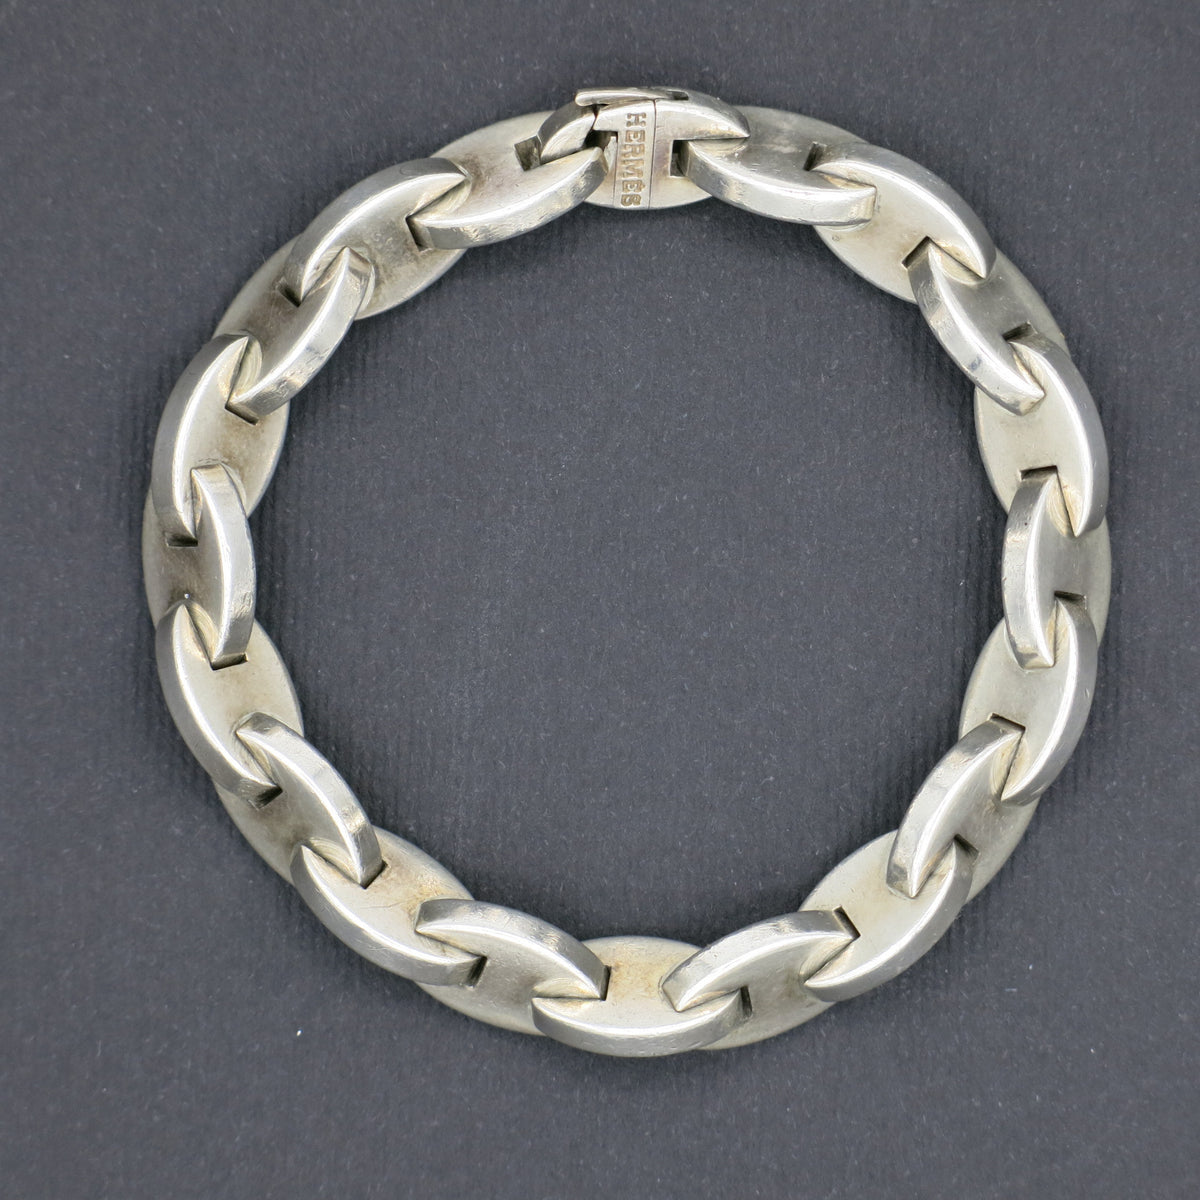 Hermès “Nova” Bracelet